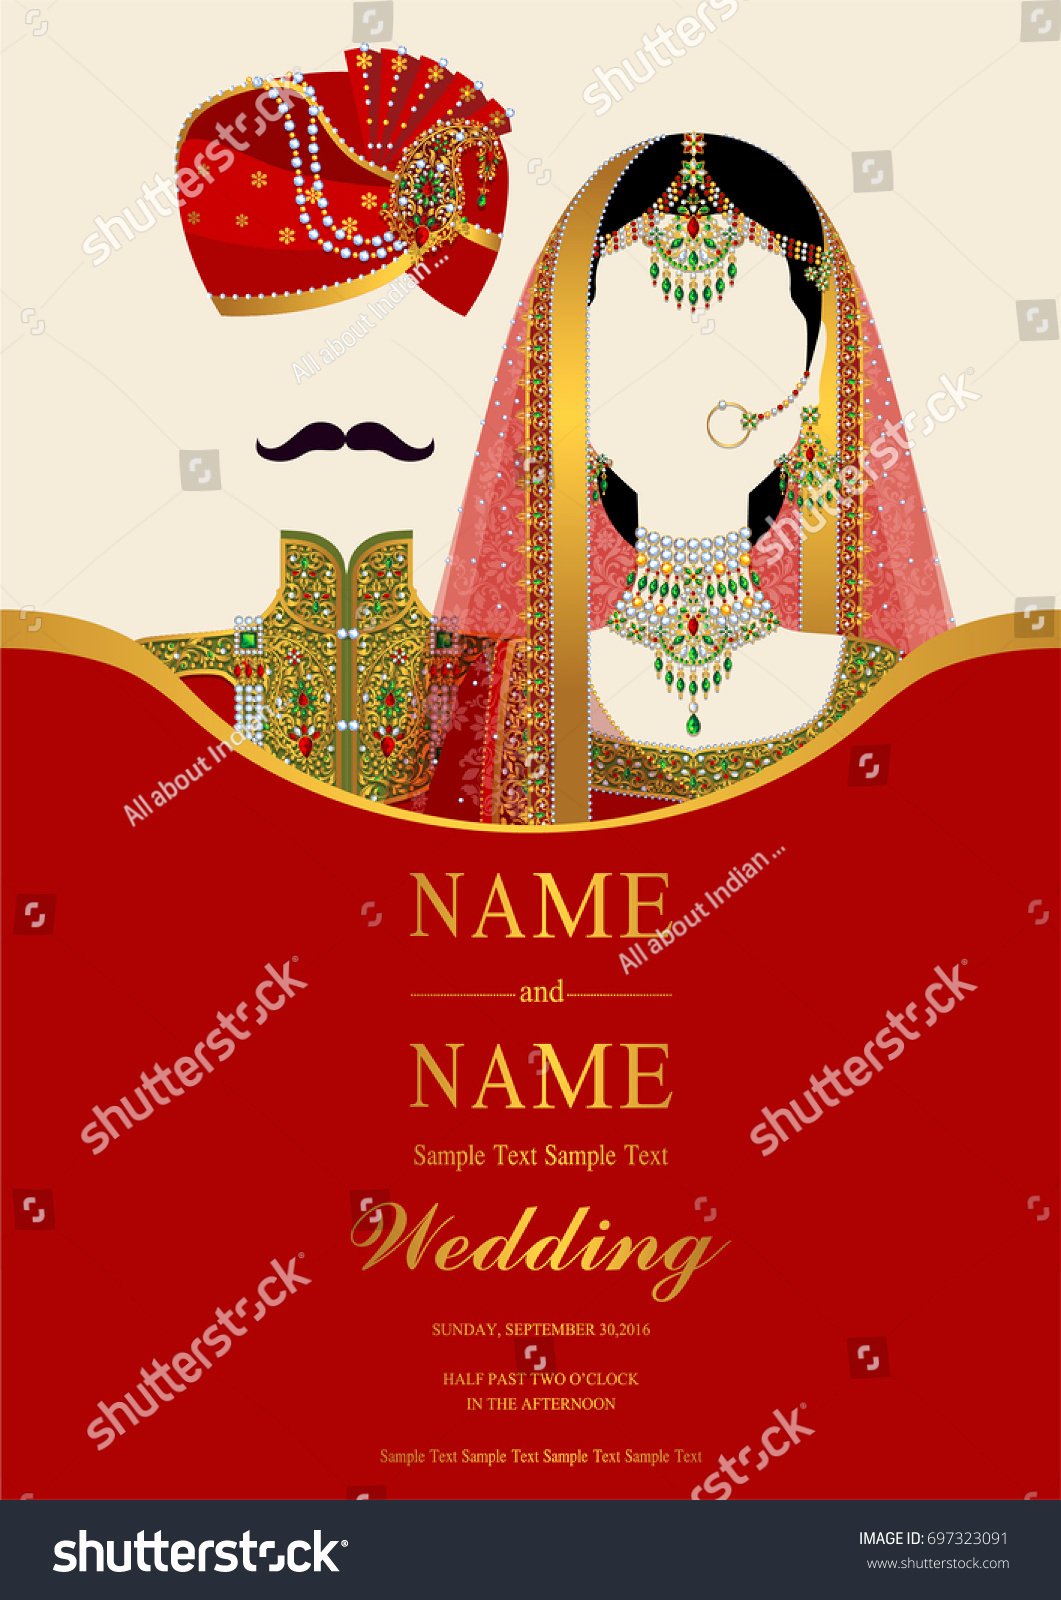 Indian Wedding Card Template Unique Wedding Invitation Card Templates Indian Man Stock Vector